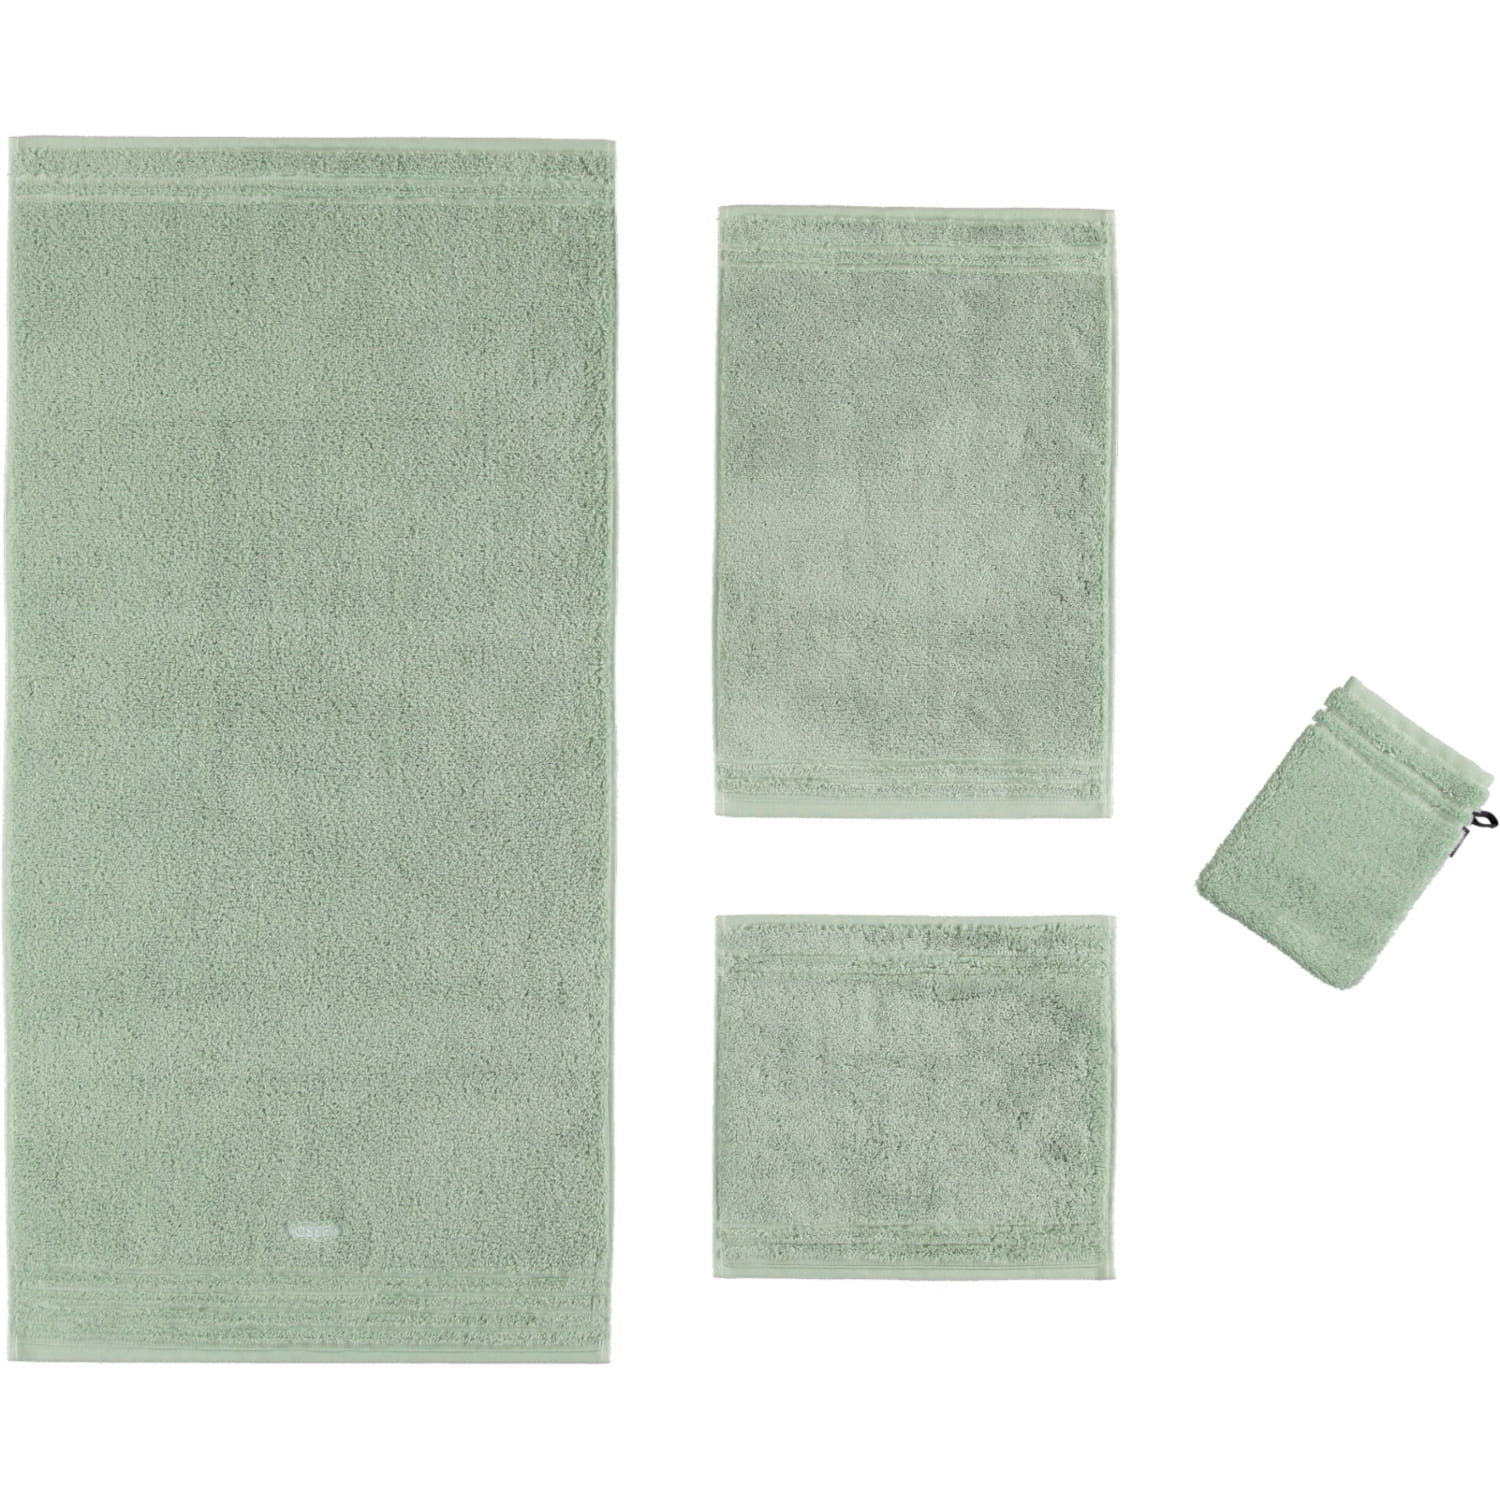 Vossen Vienna Style Supersoft - Farbe: soft green - 5305 - Duschtuch 67x140  cm | Vossen Handtücher | Vossen | Marken | Saunahandtücher